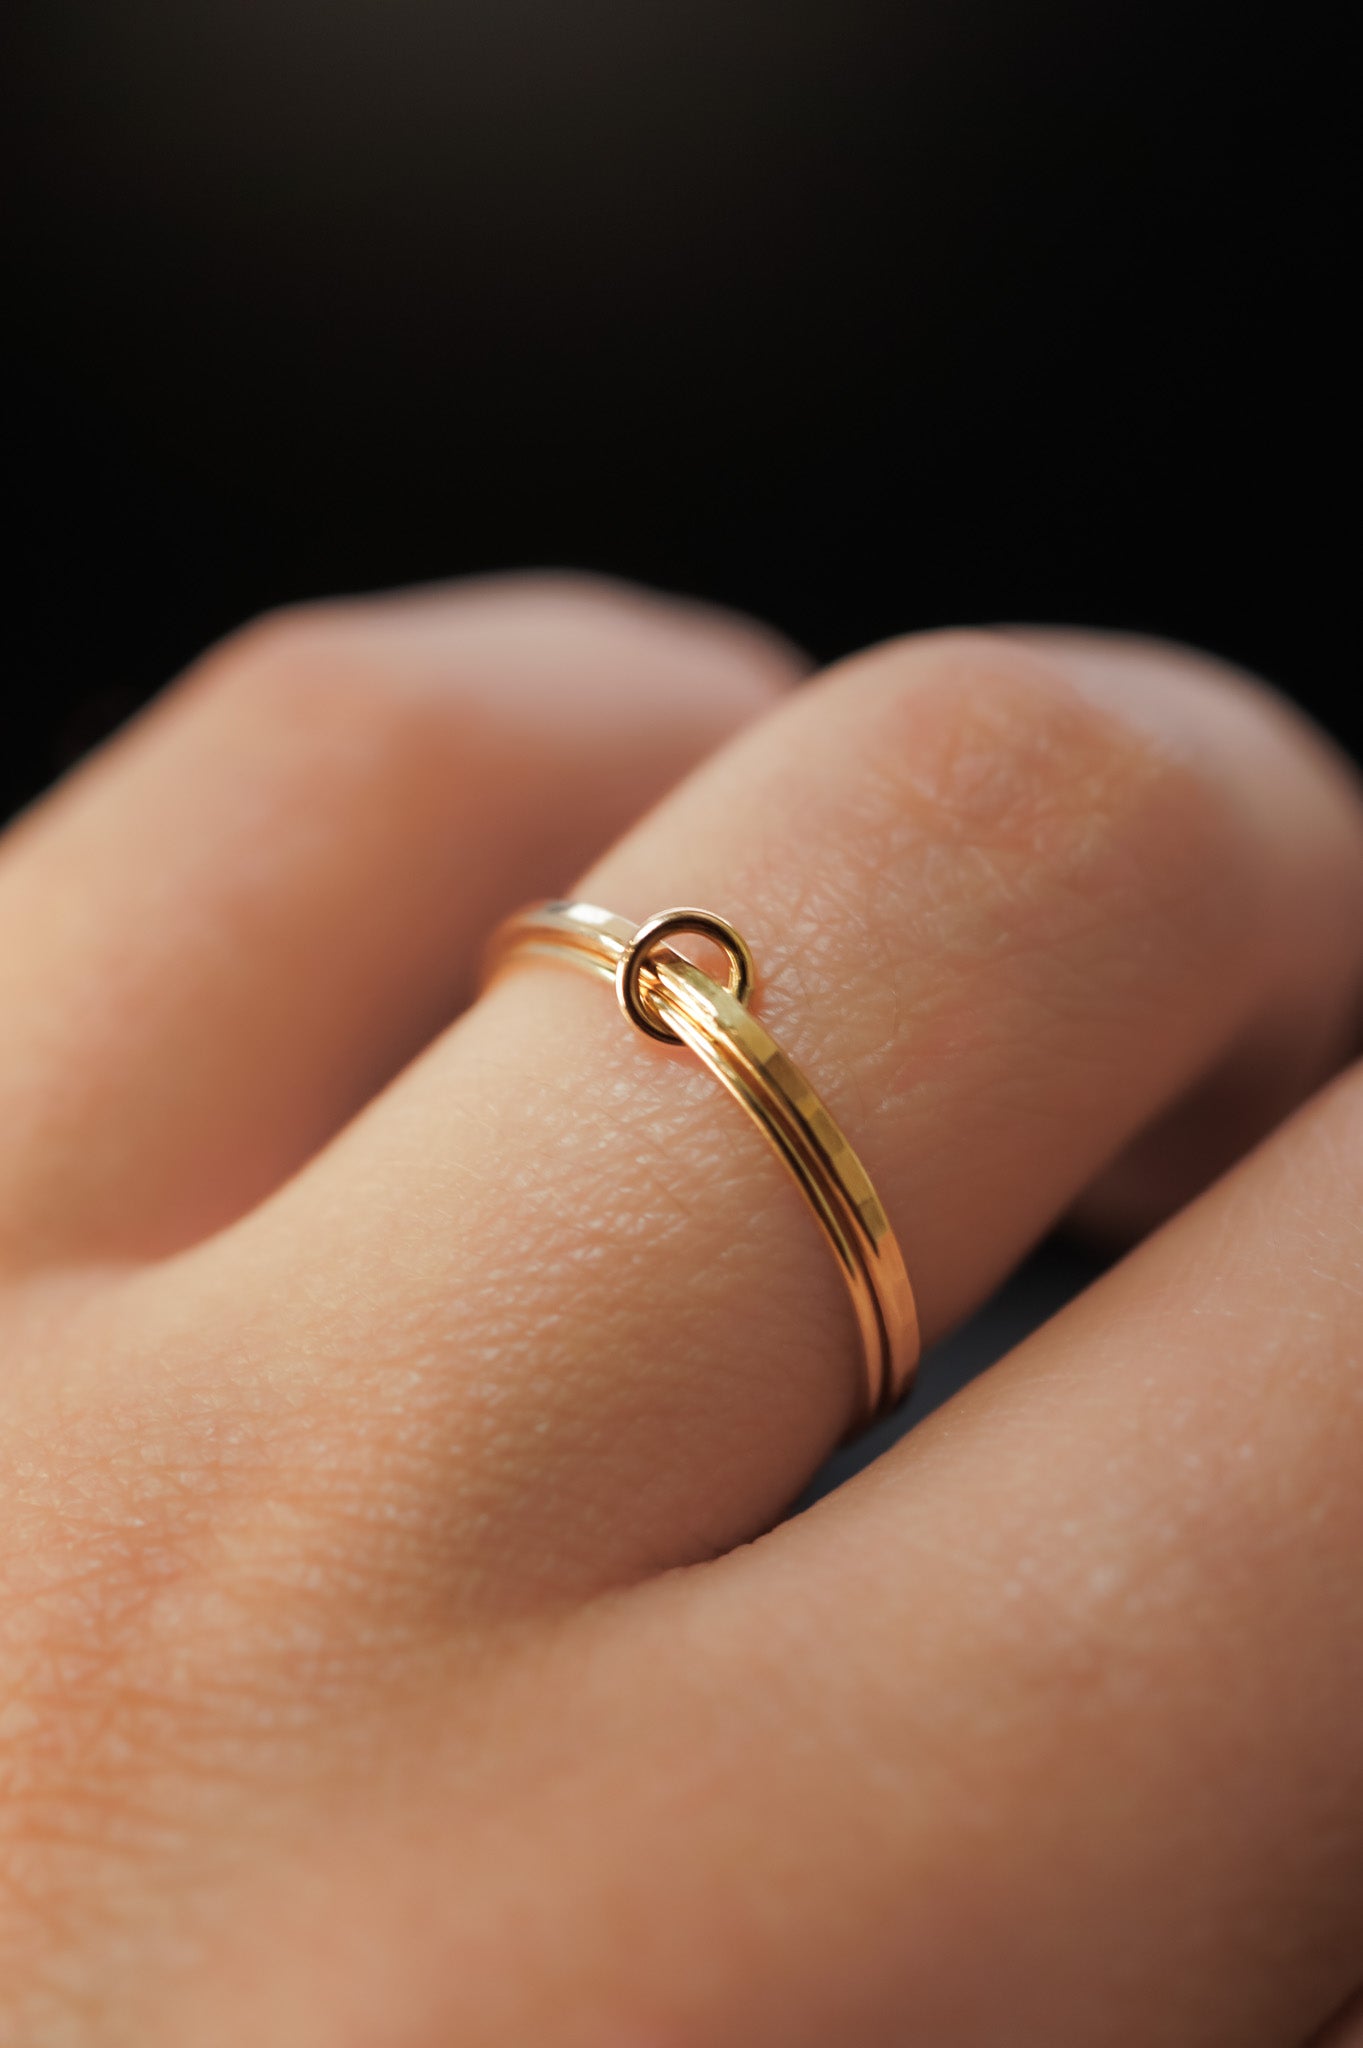 Gold Fill Link Ring on ring finger.